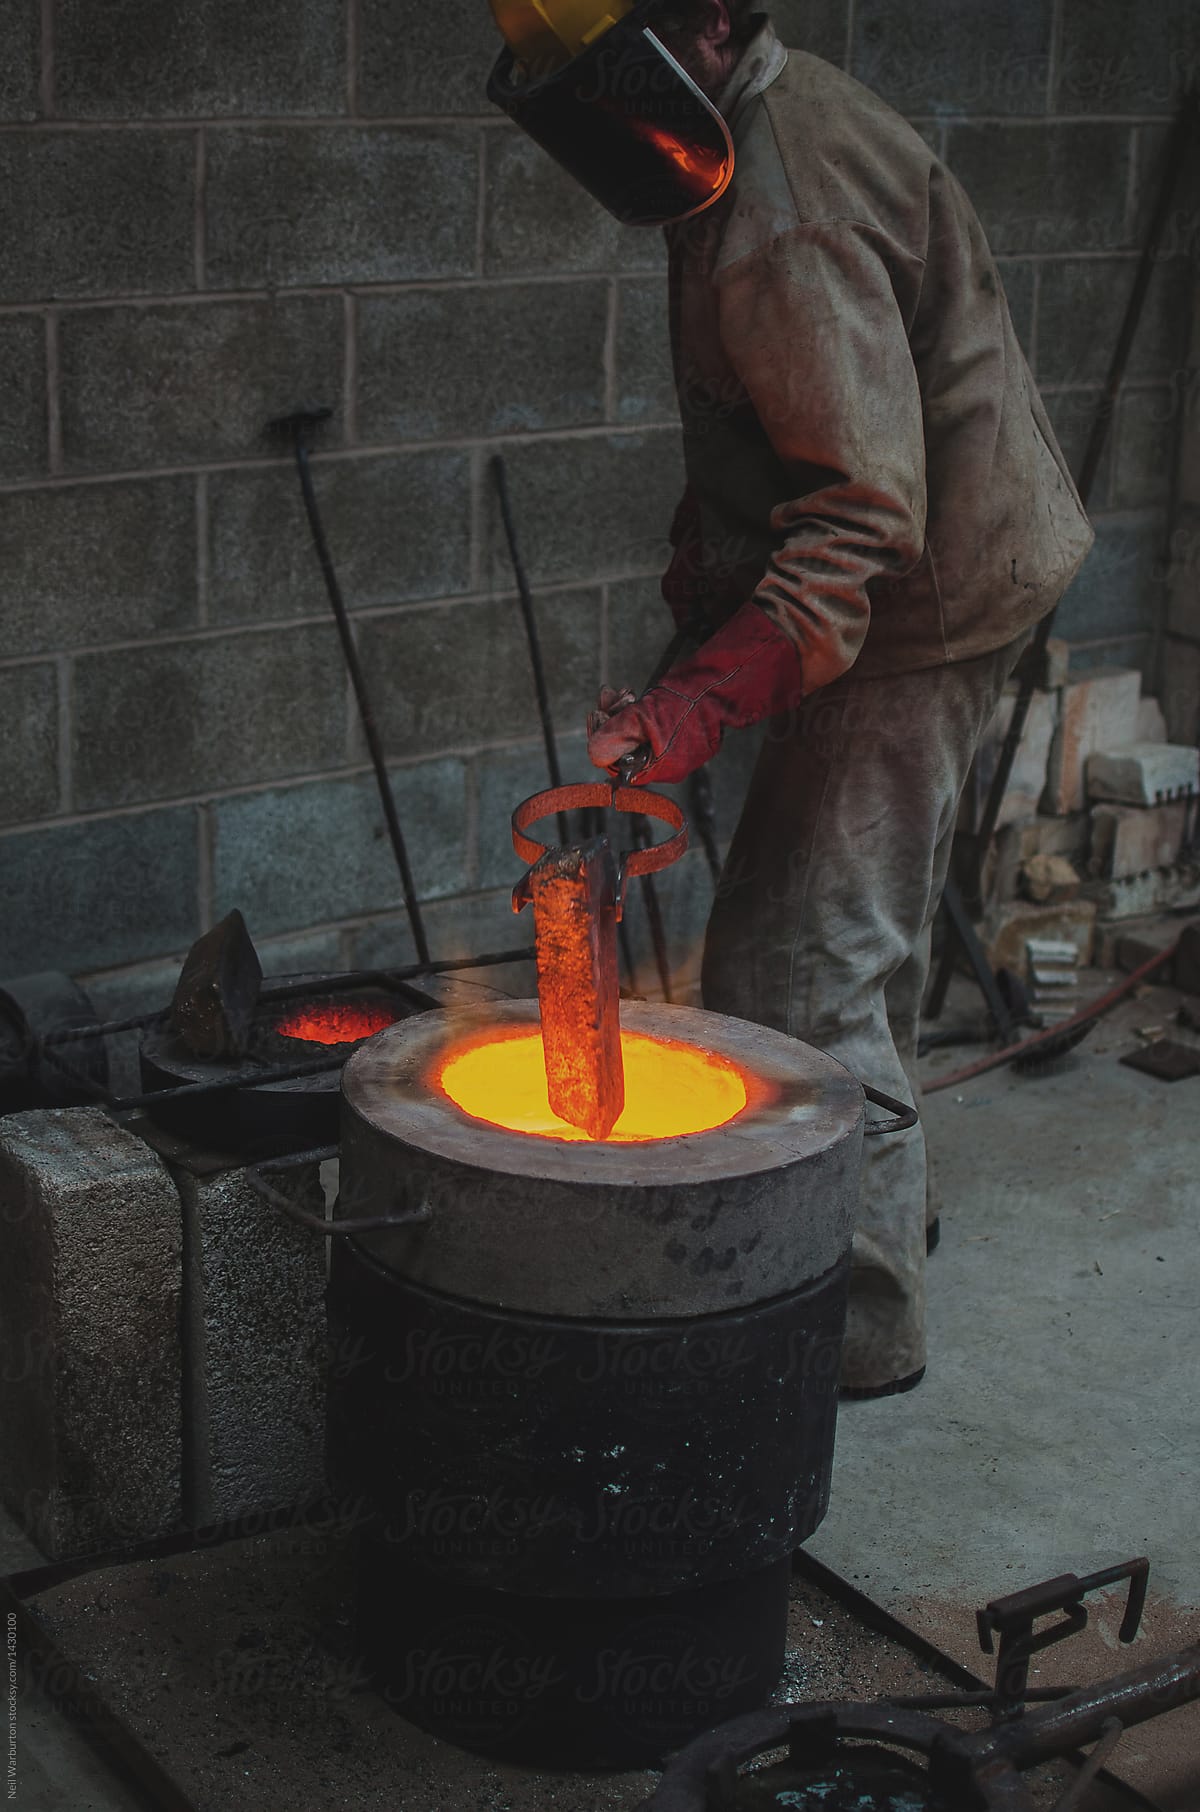 Worker lowering ingot into furnace